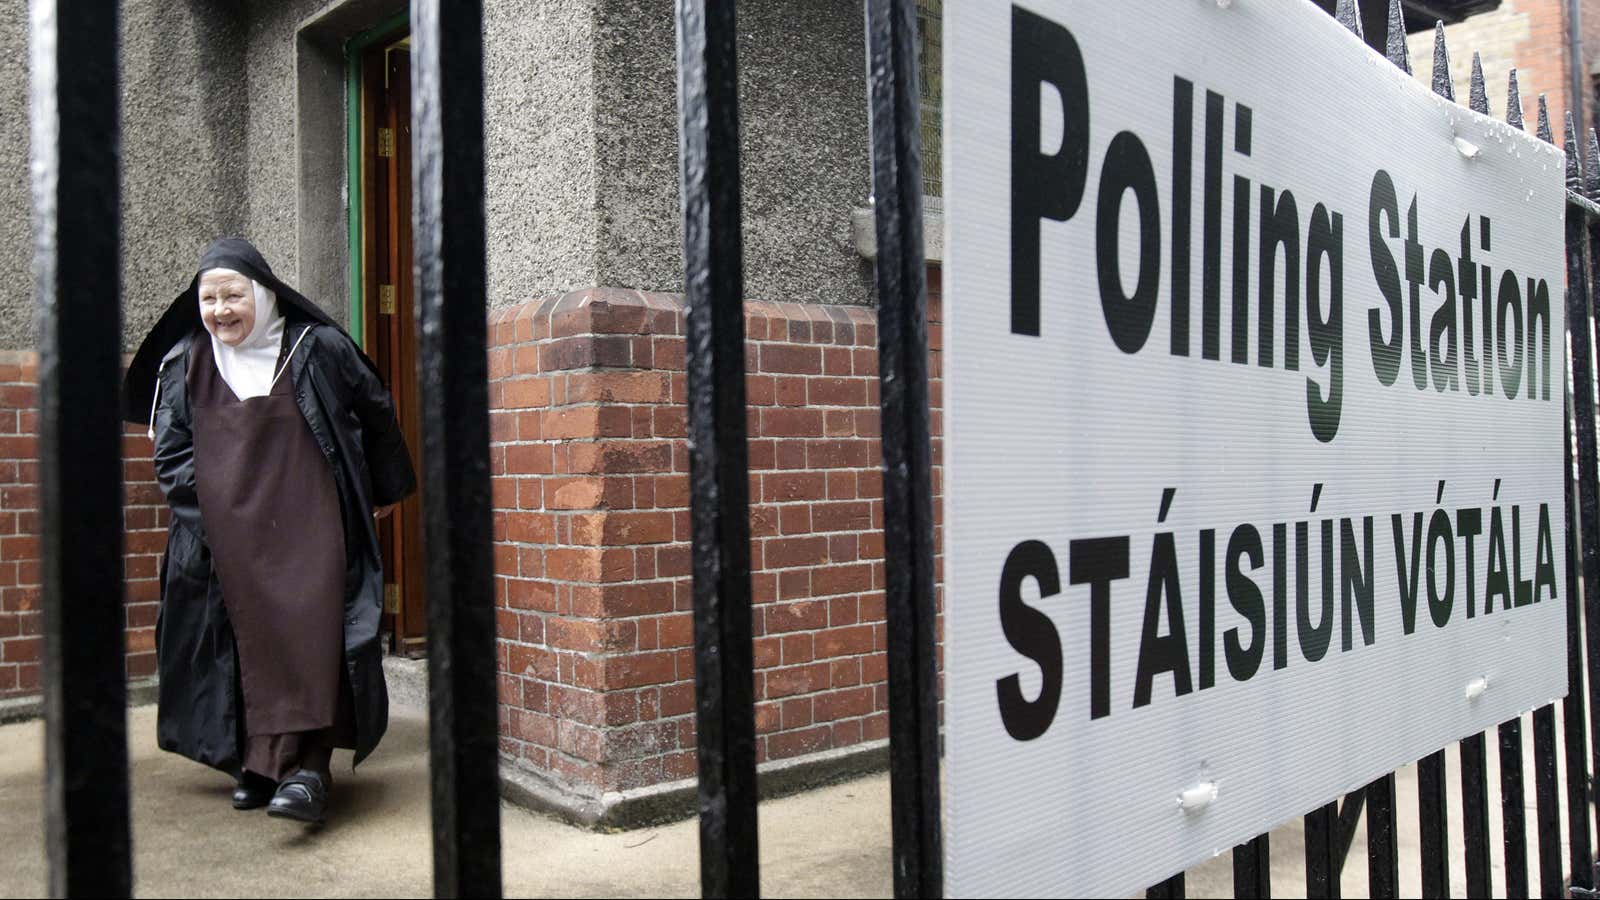 A nun exits a polling station in Dublin.